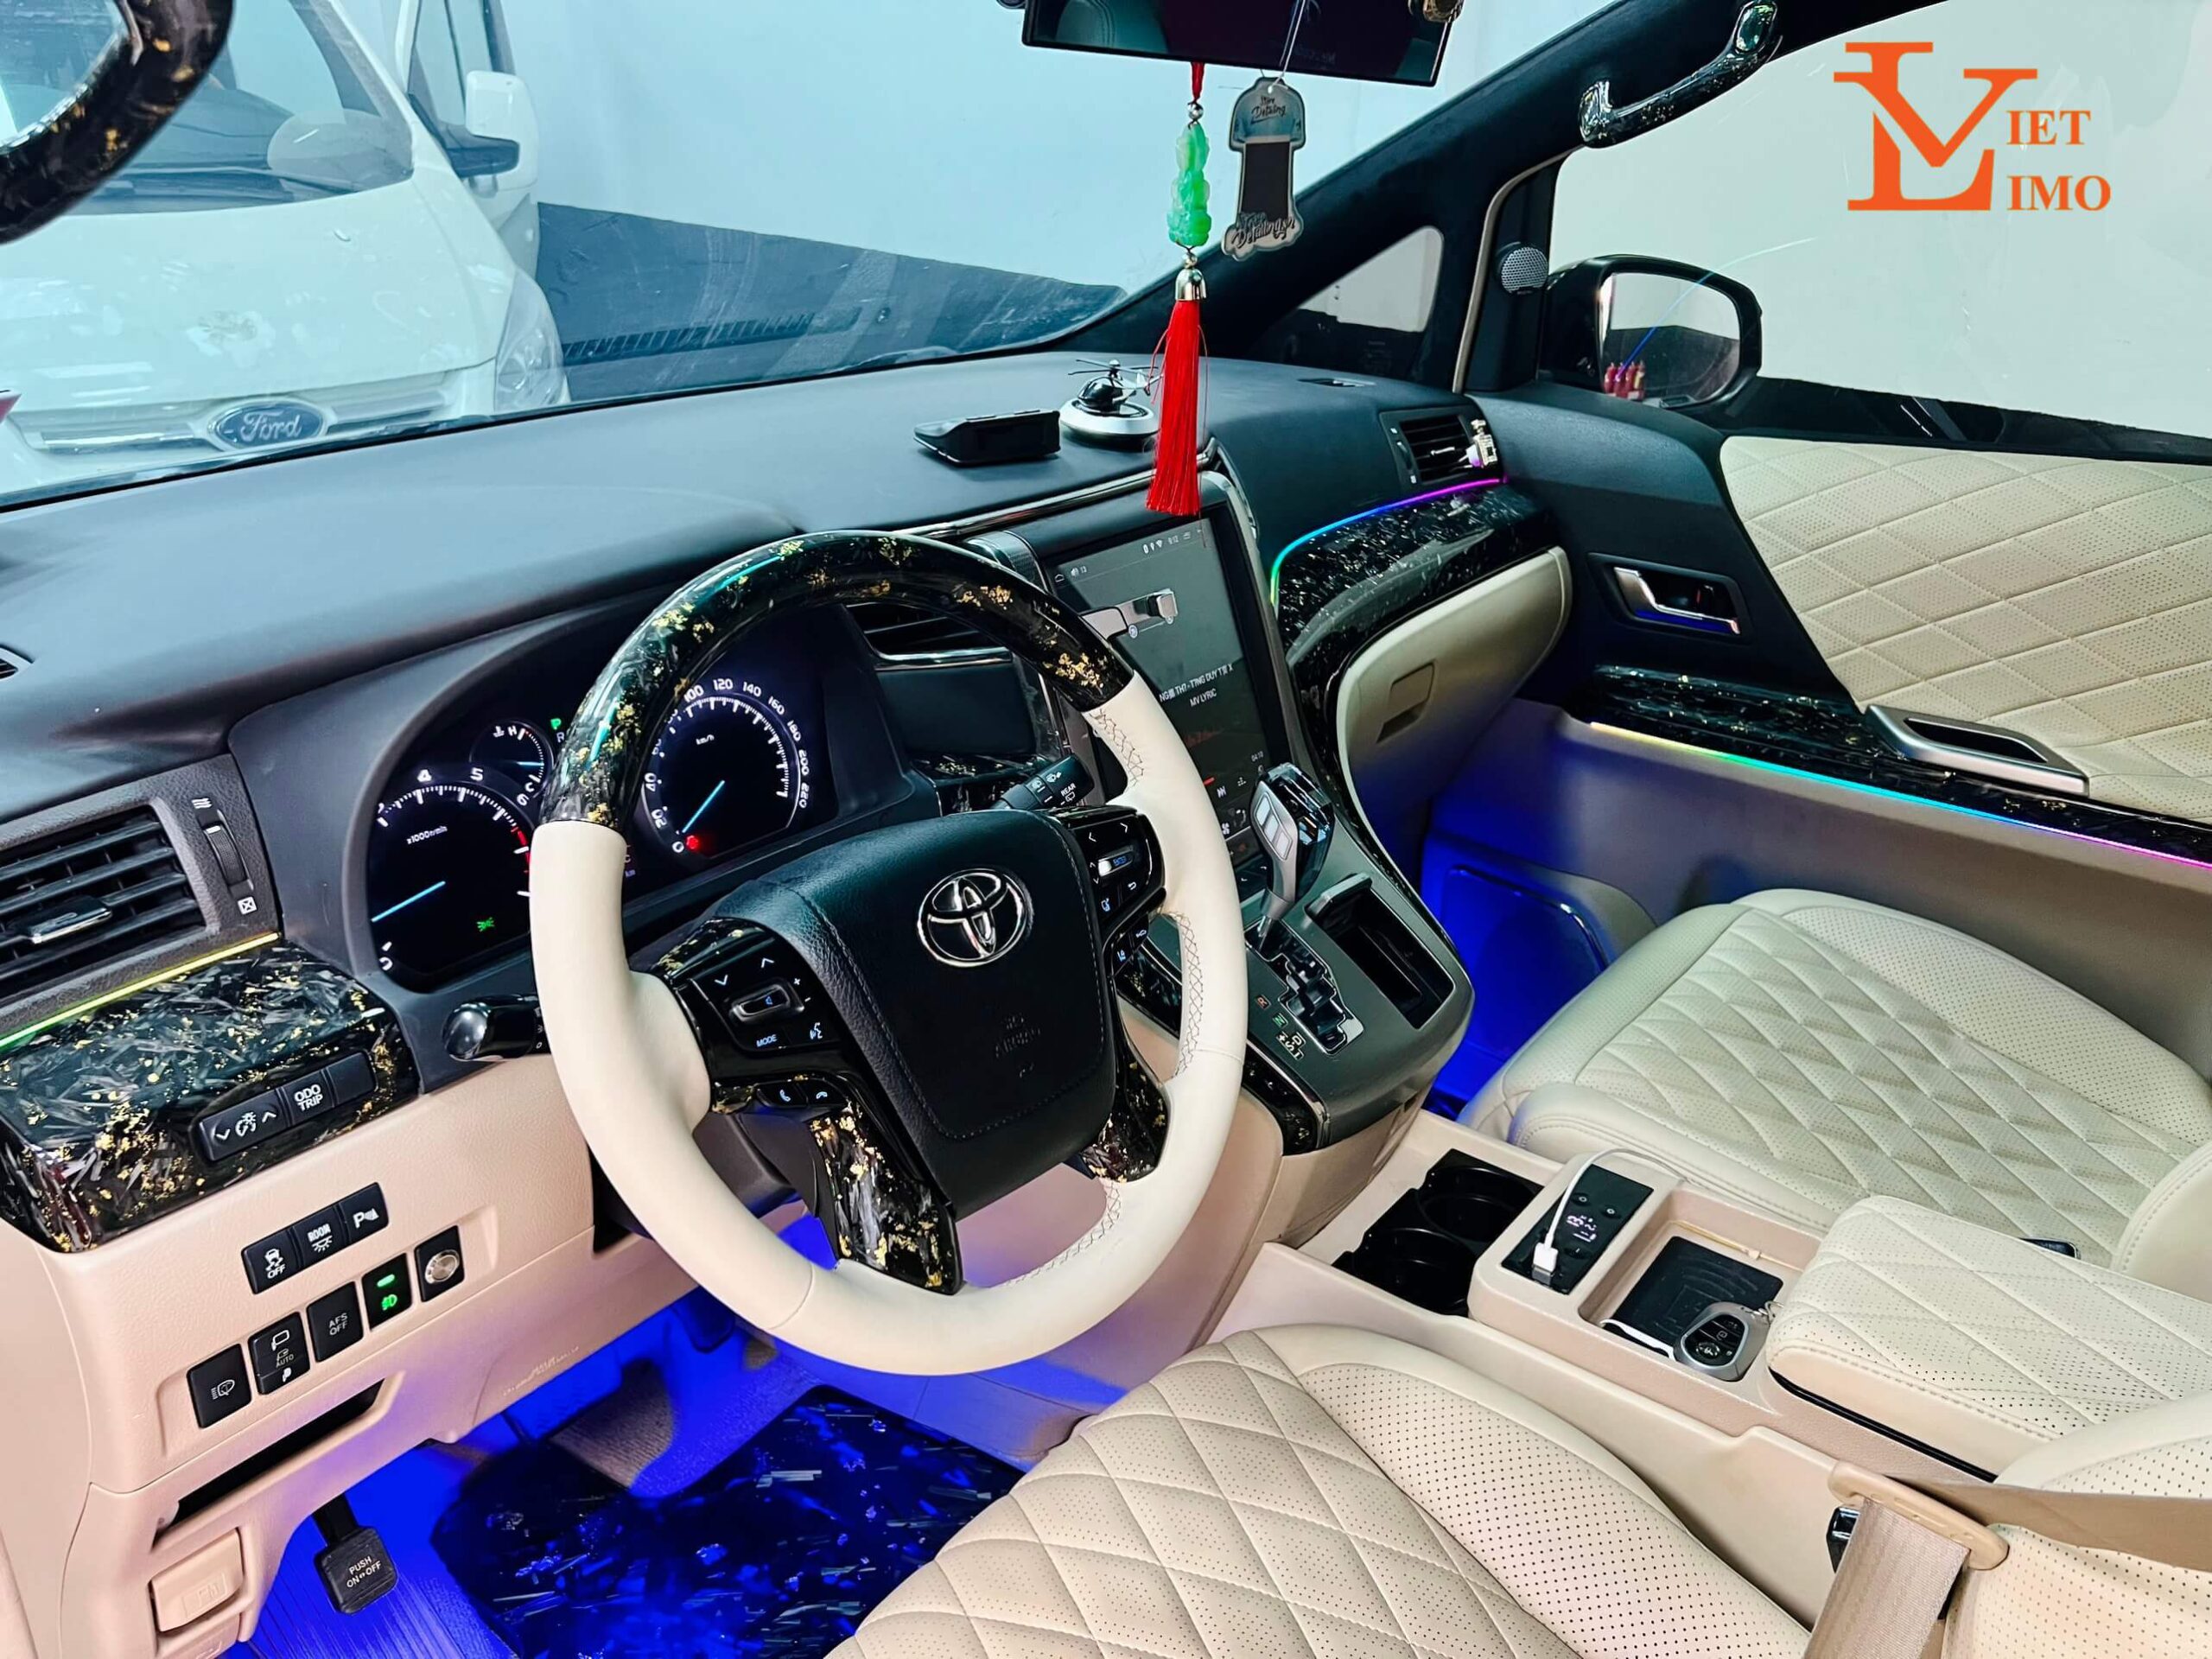 Toyota Alphard Vietlimo 6